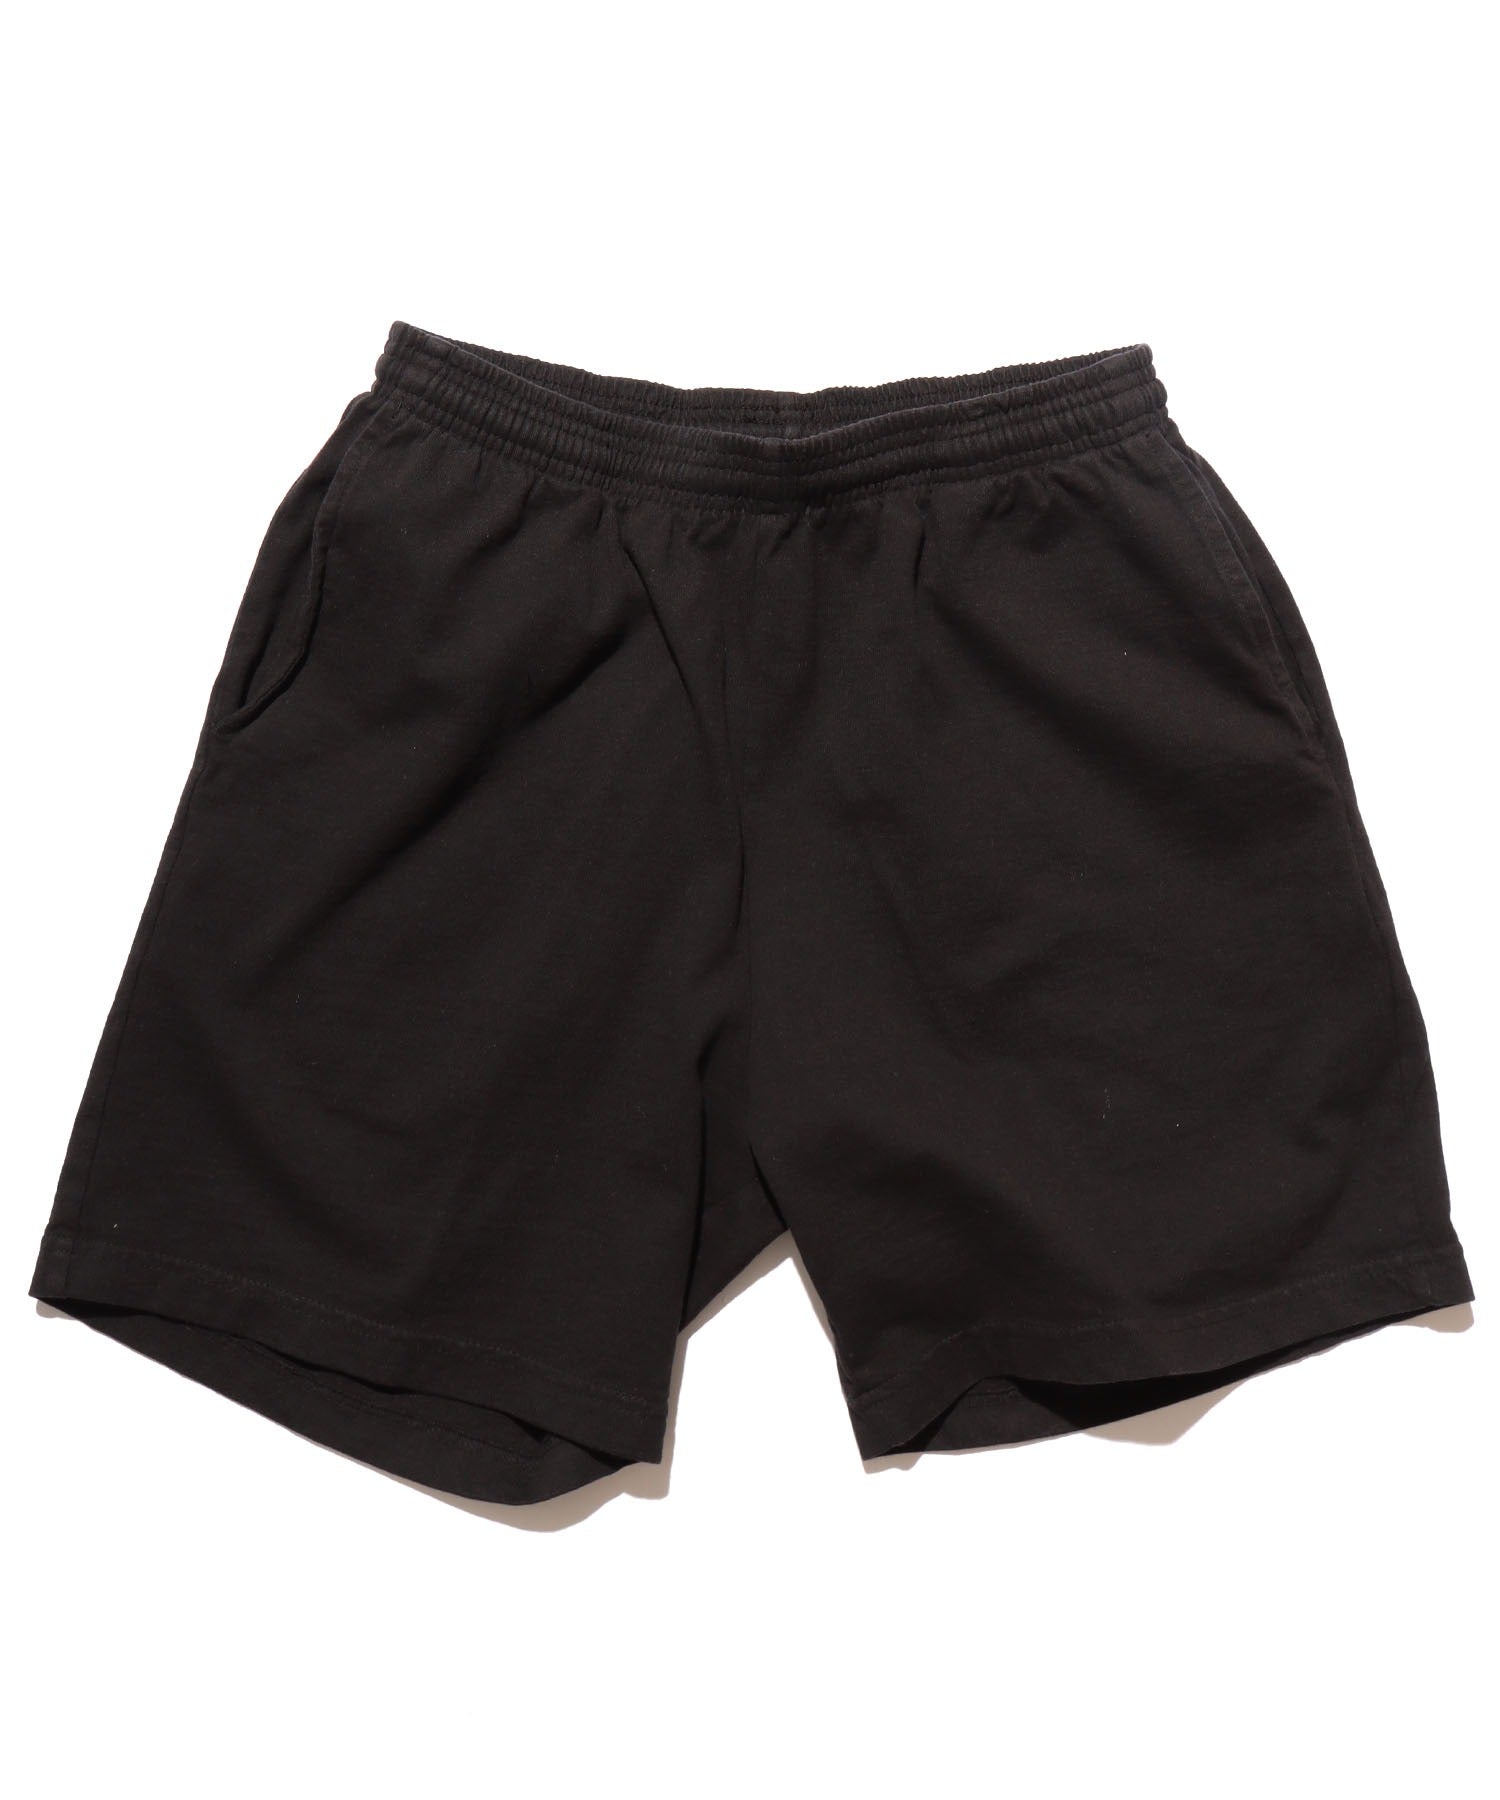 8.5oz Cotton Shorts